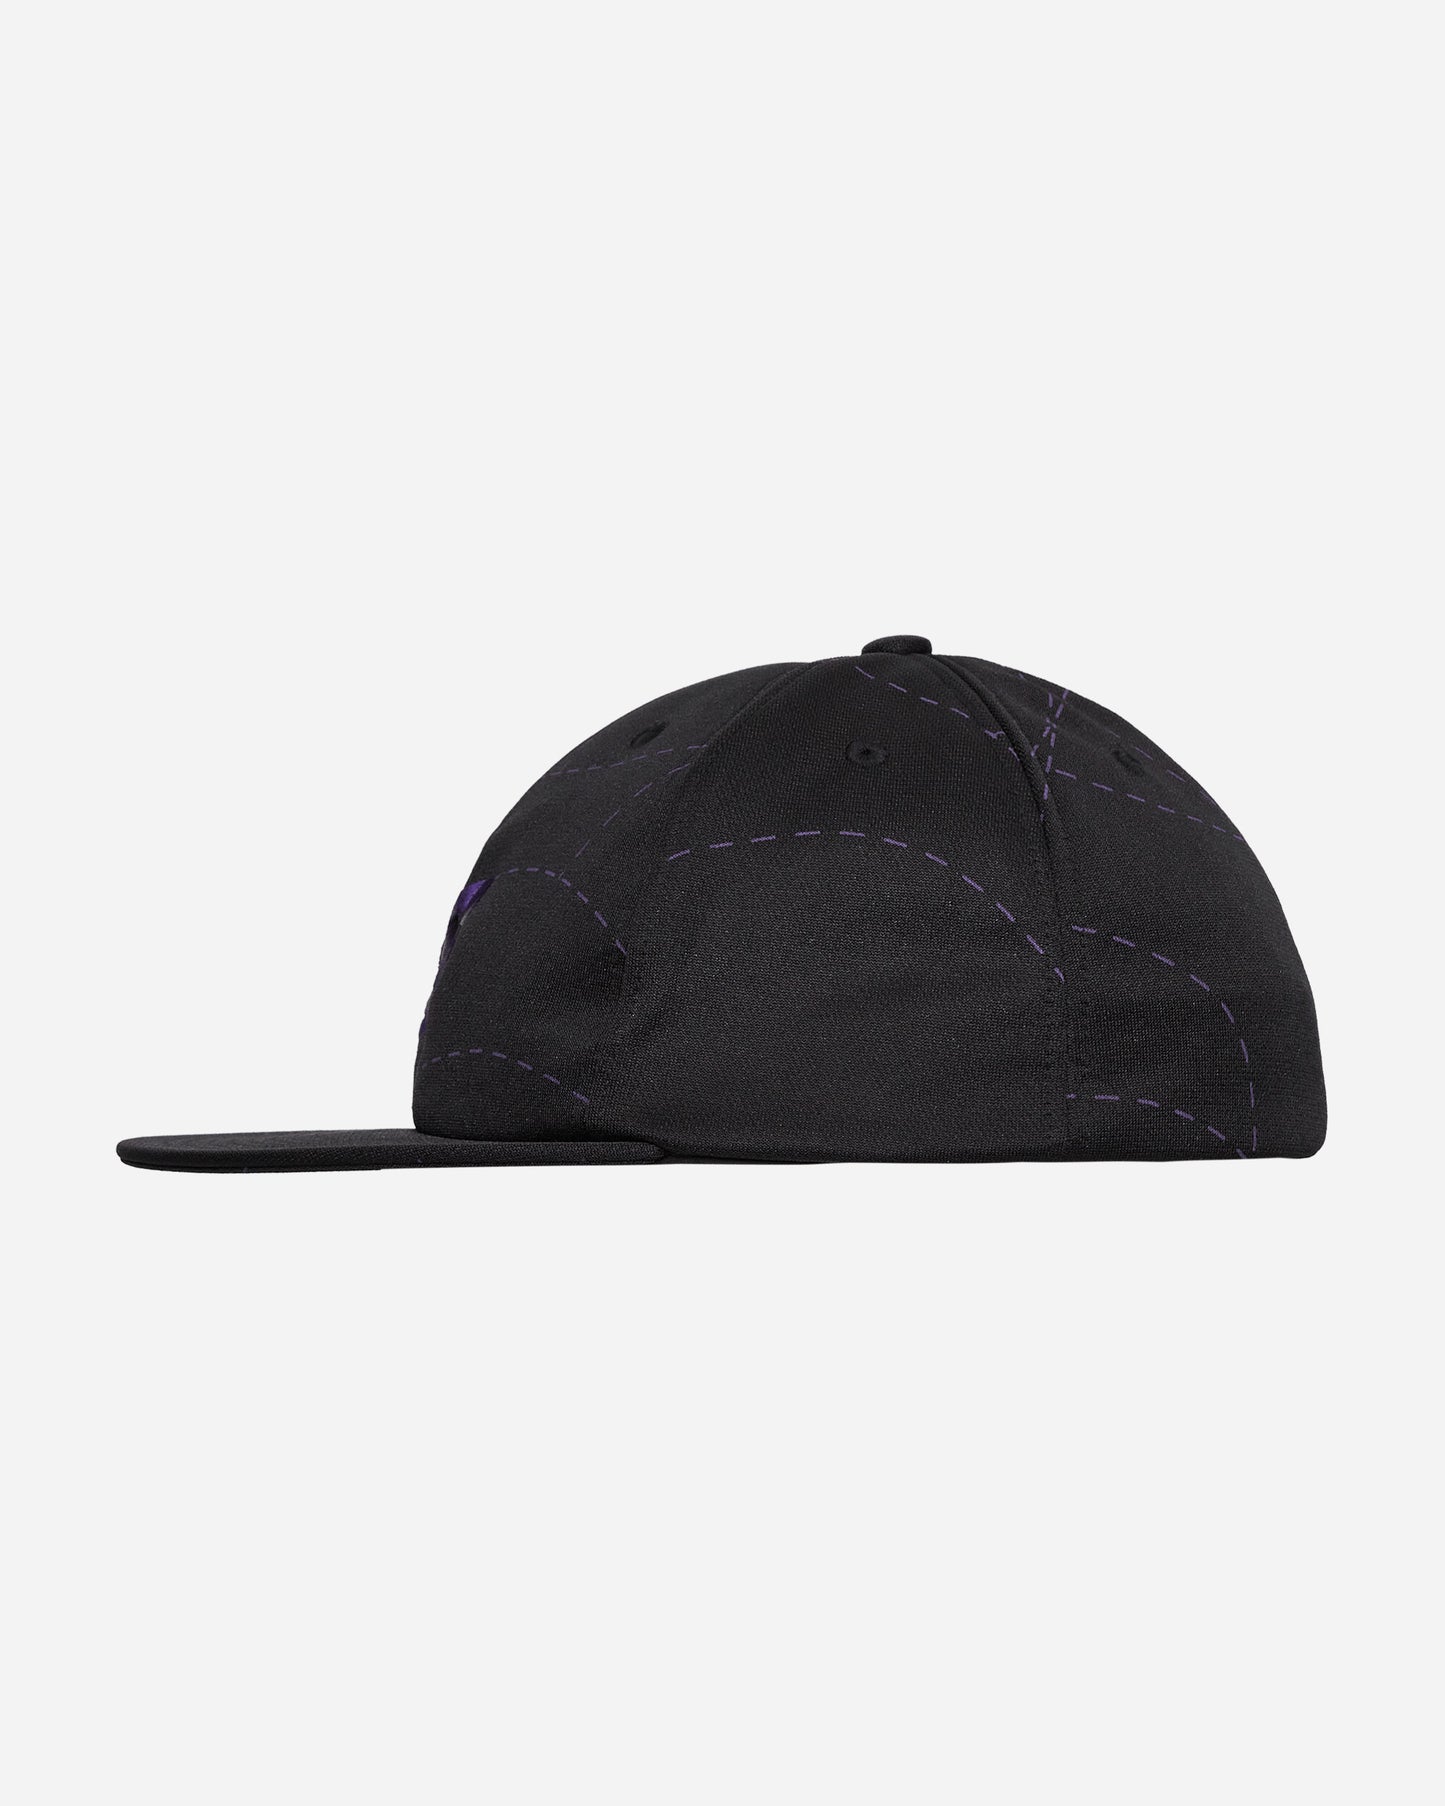 Needles Baseball Cap Black Hats Caps MR611 B